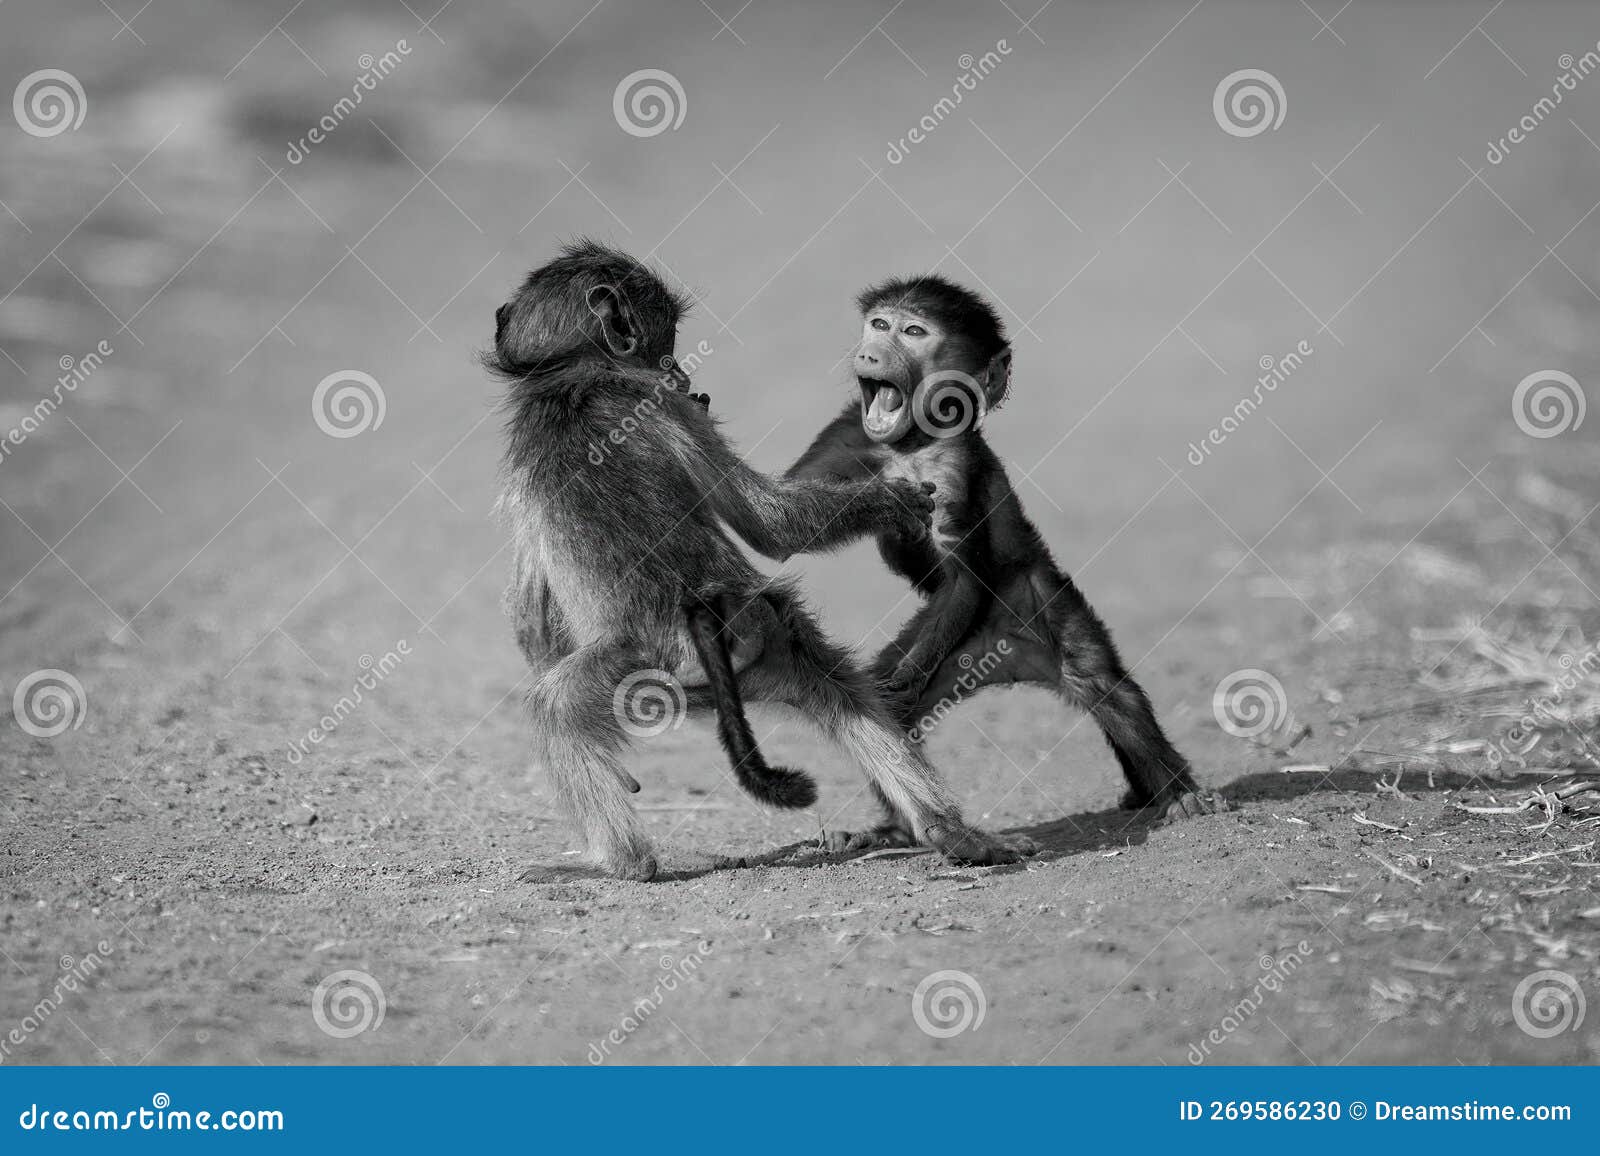 mono baby chacma baboons play on track